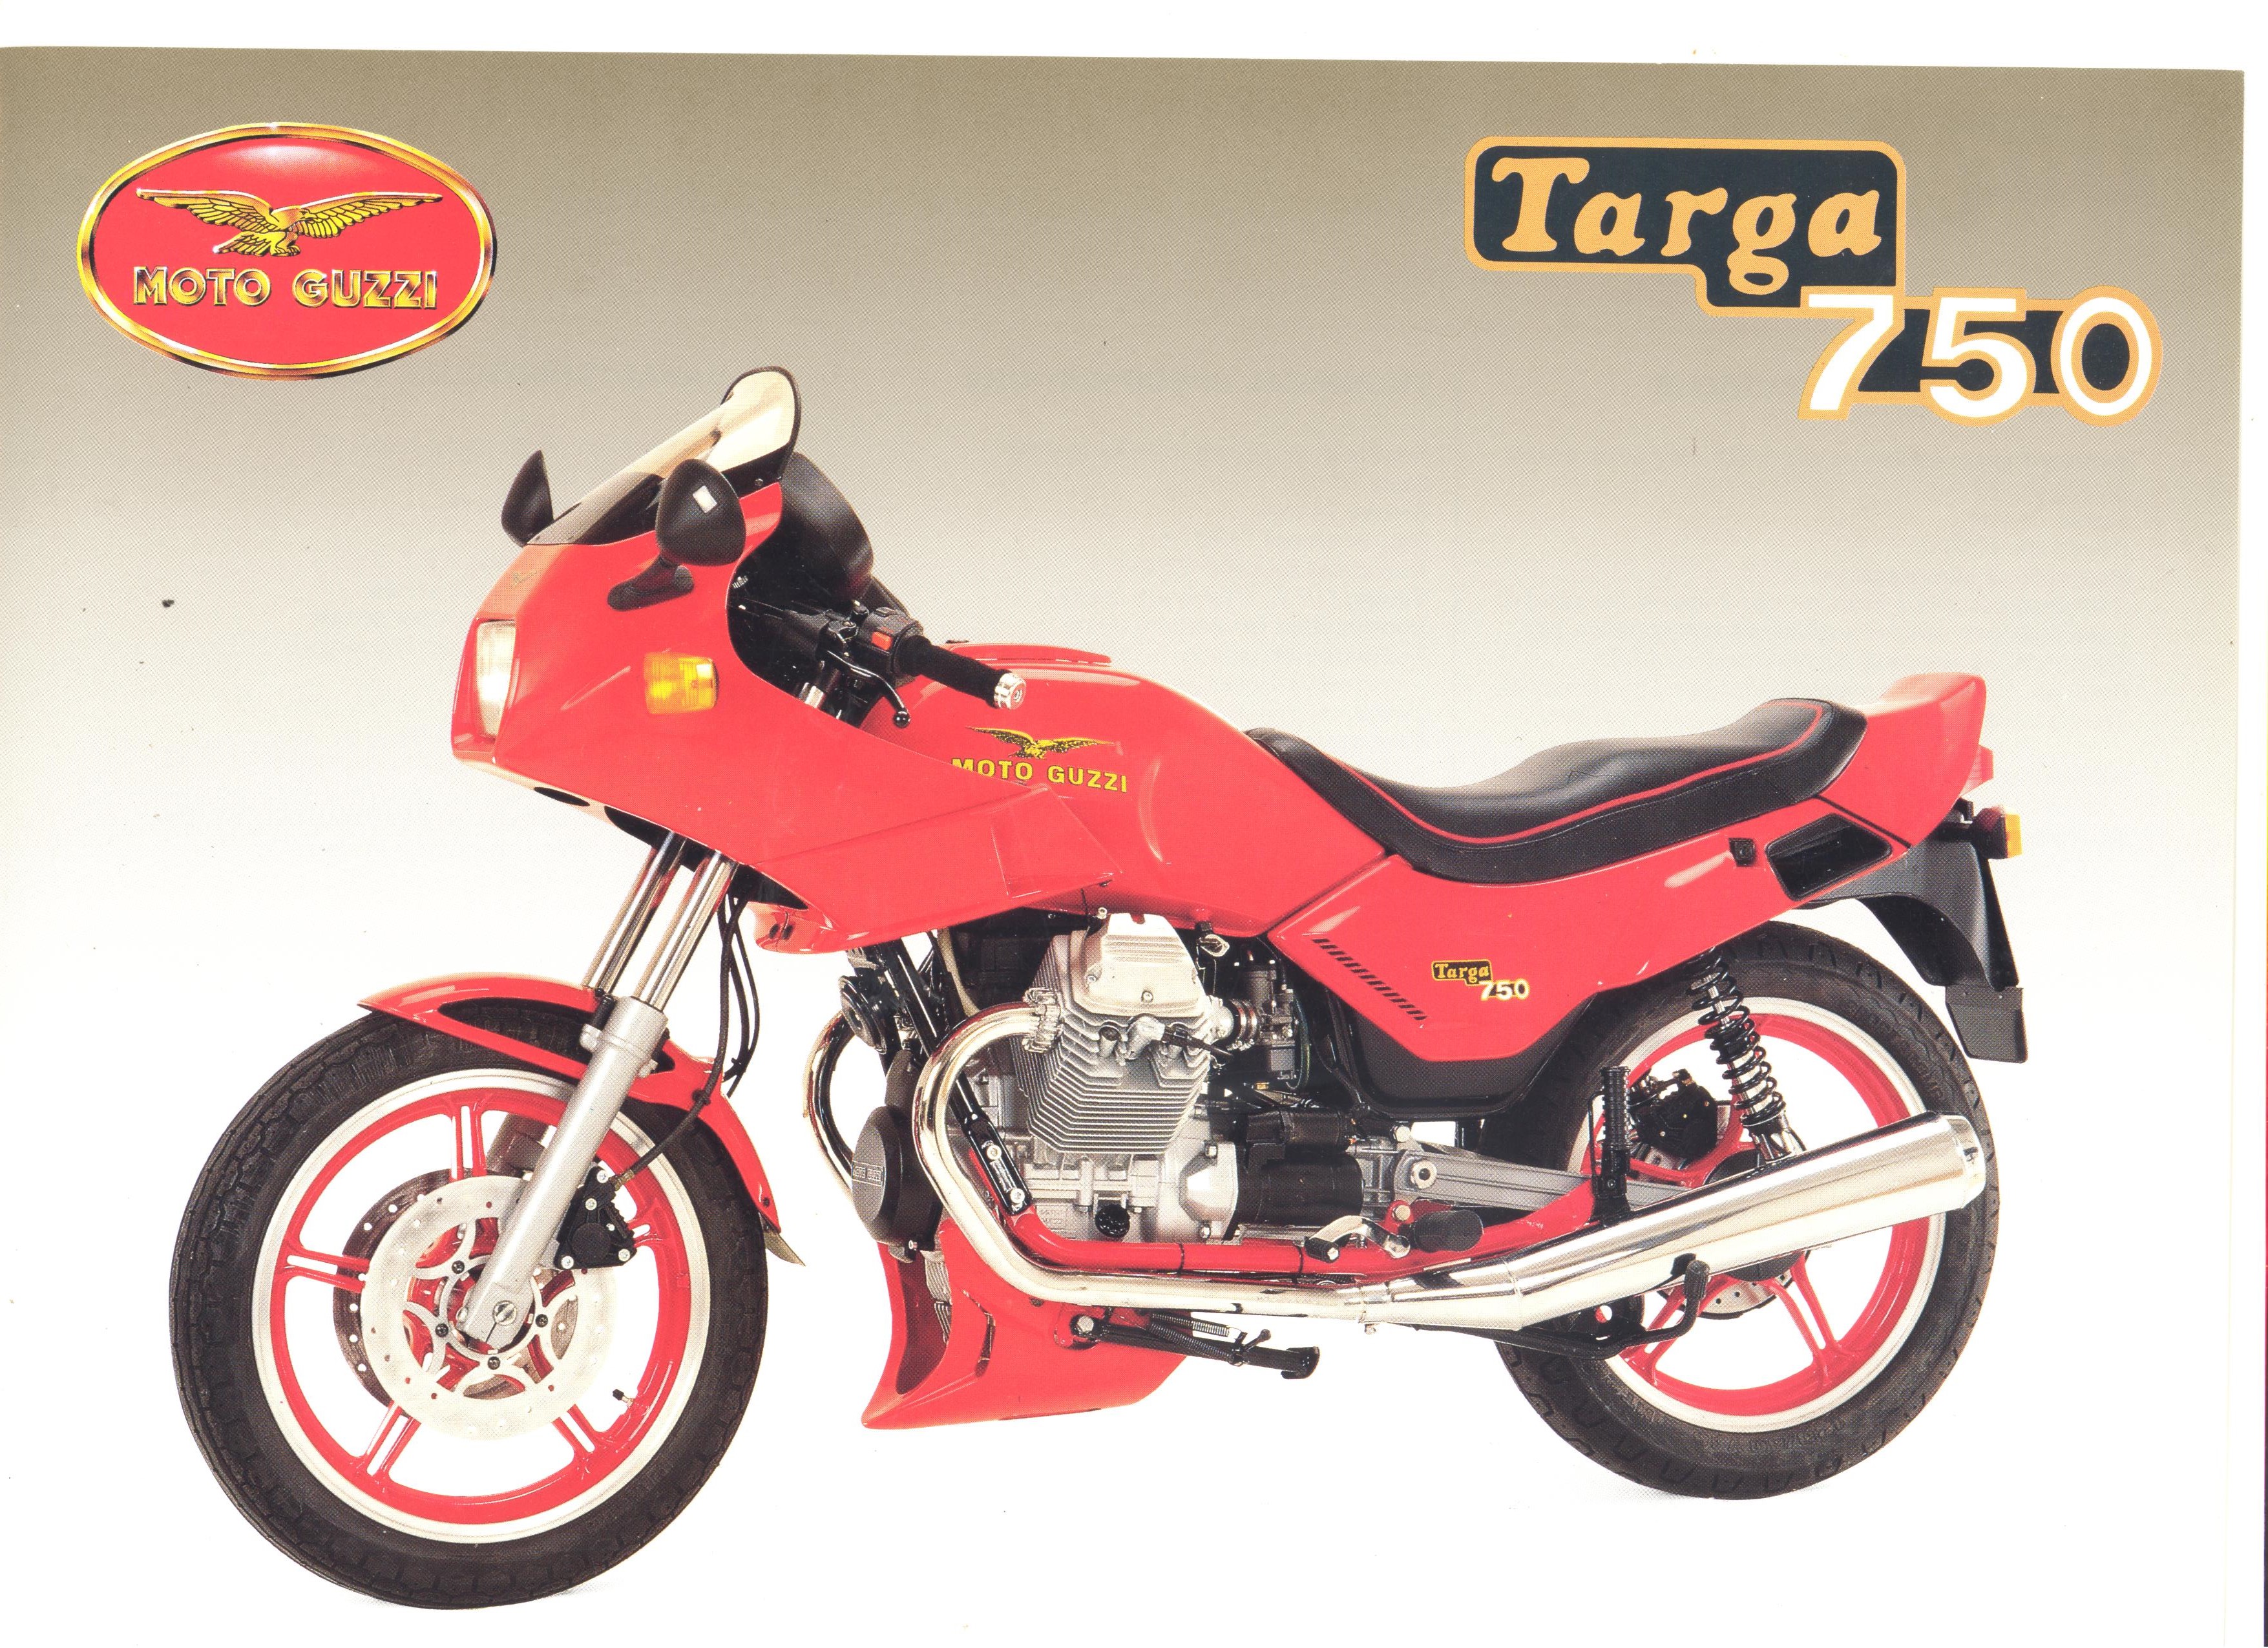 Moto Guzzi factory brochure: Targa 750